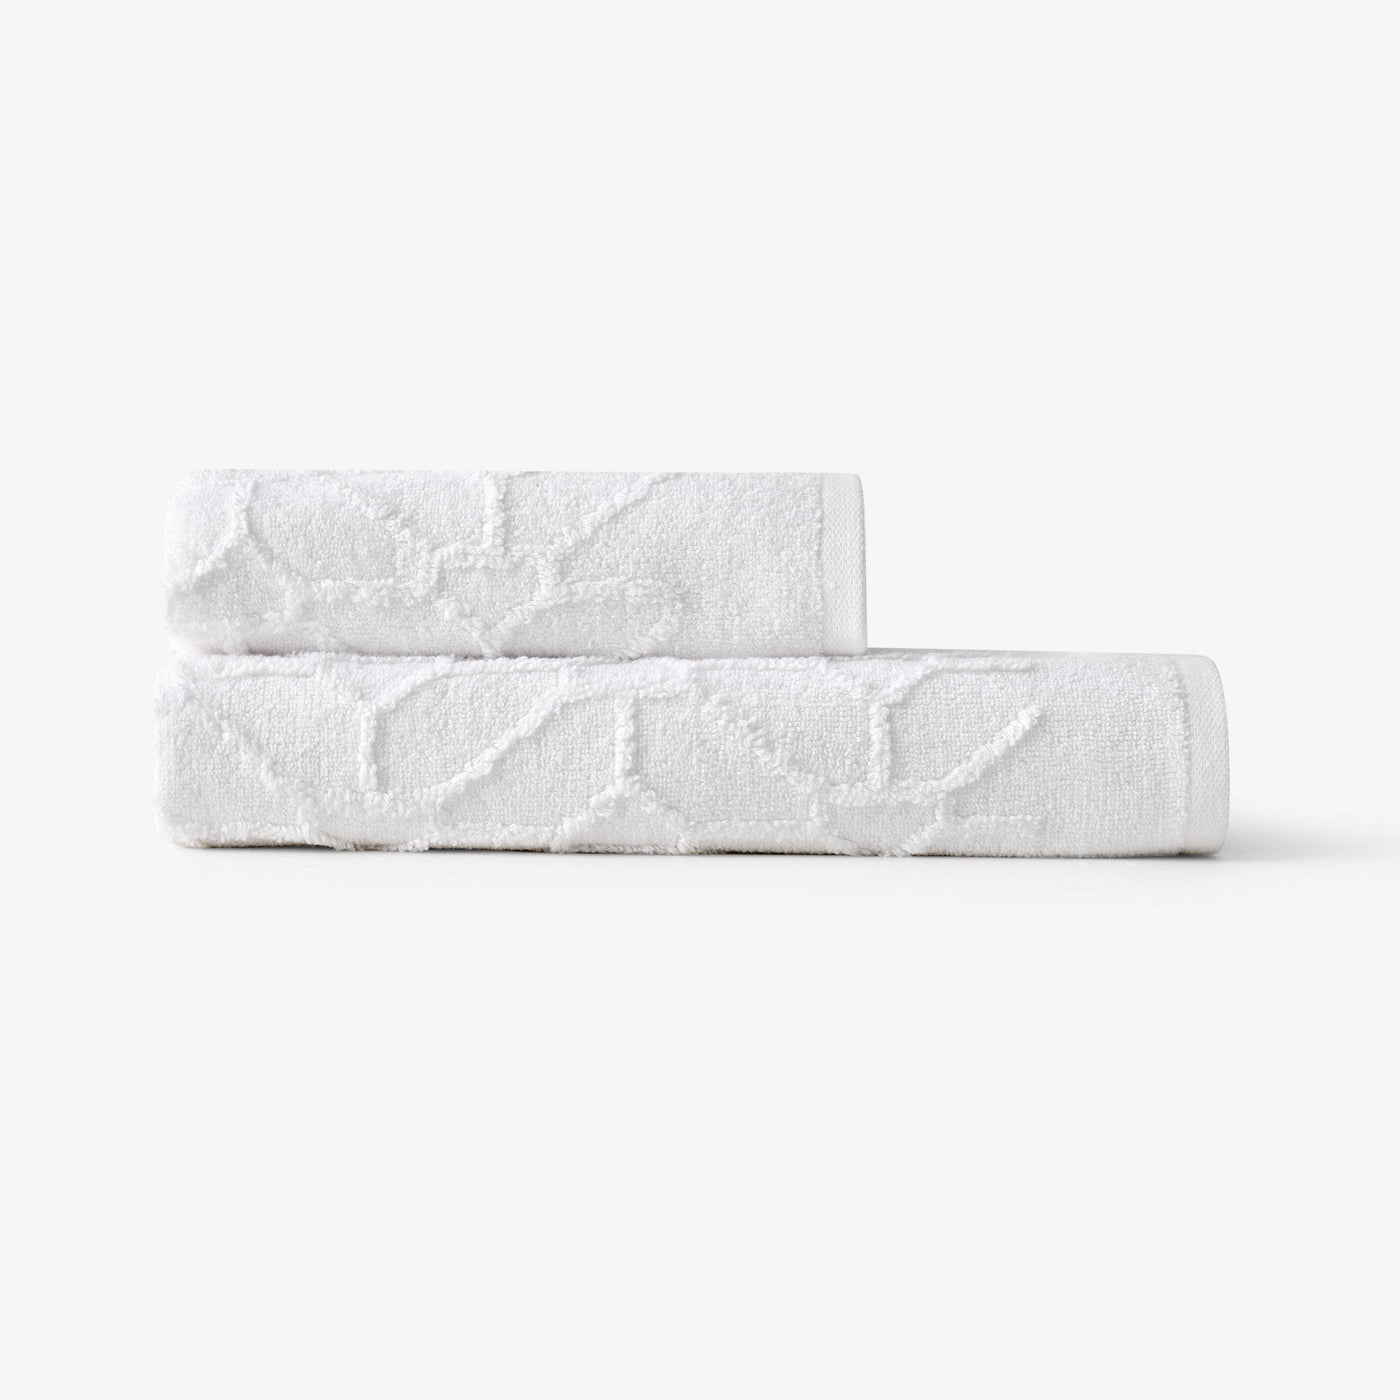 Harry Jacquard 100% Turkish Cotton Bath Towel, White Bath Towels sazy.com